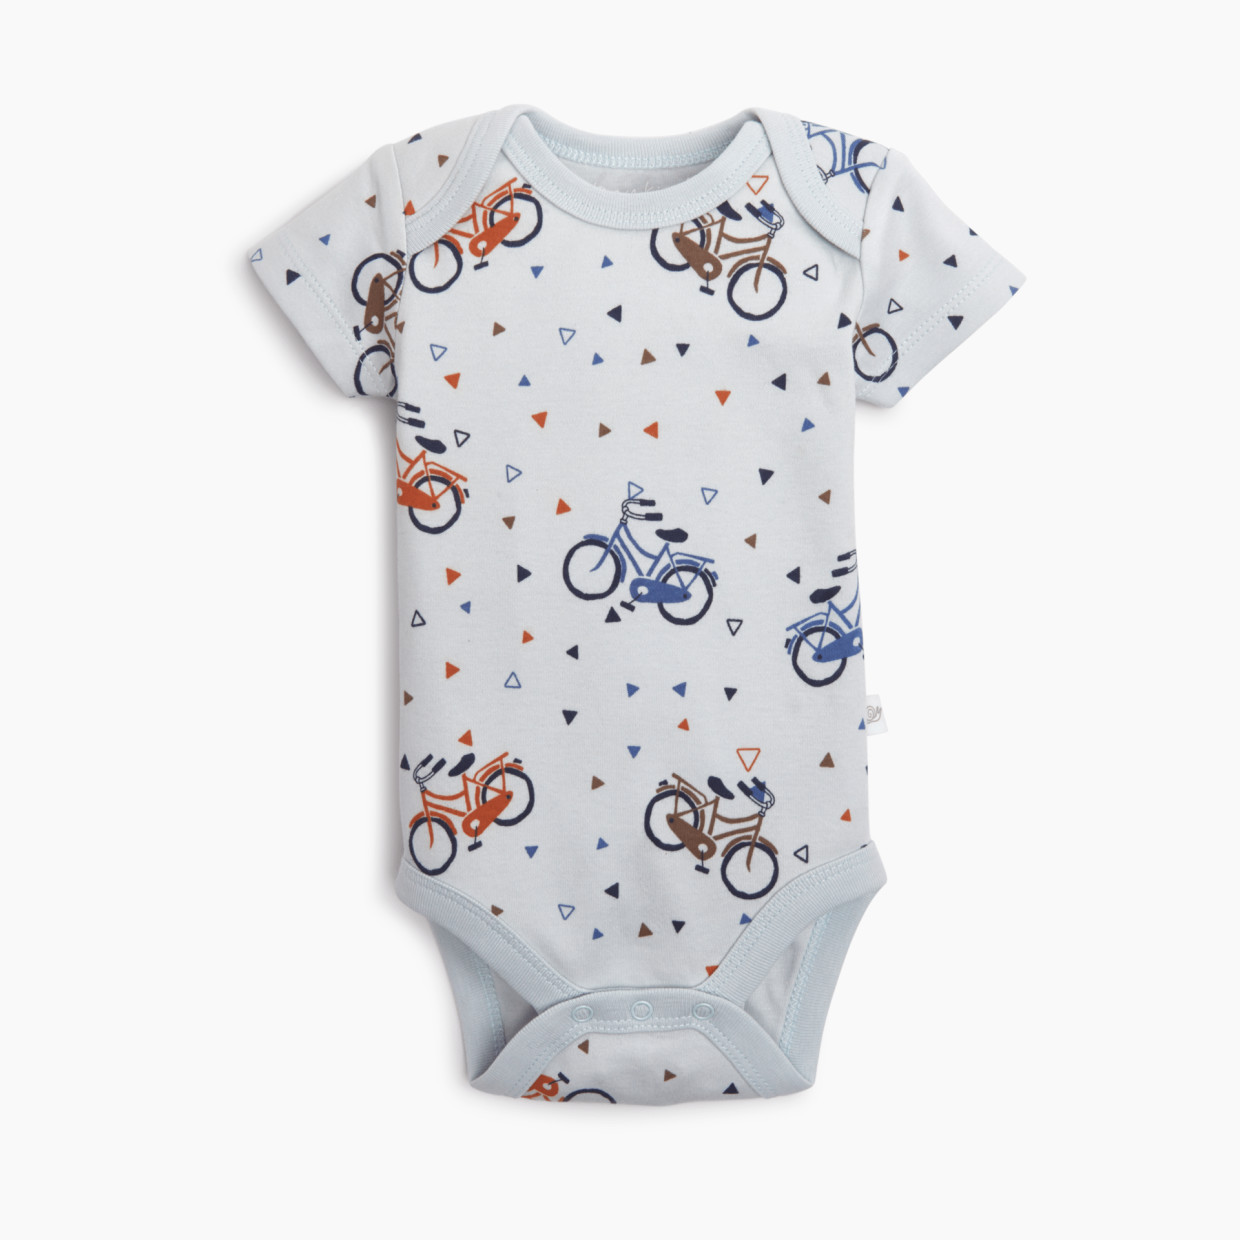 Tiny Kind Printed Short Sleeve Organic Cotton Bodysuit - Bicycle, 3-6 M.